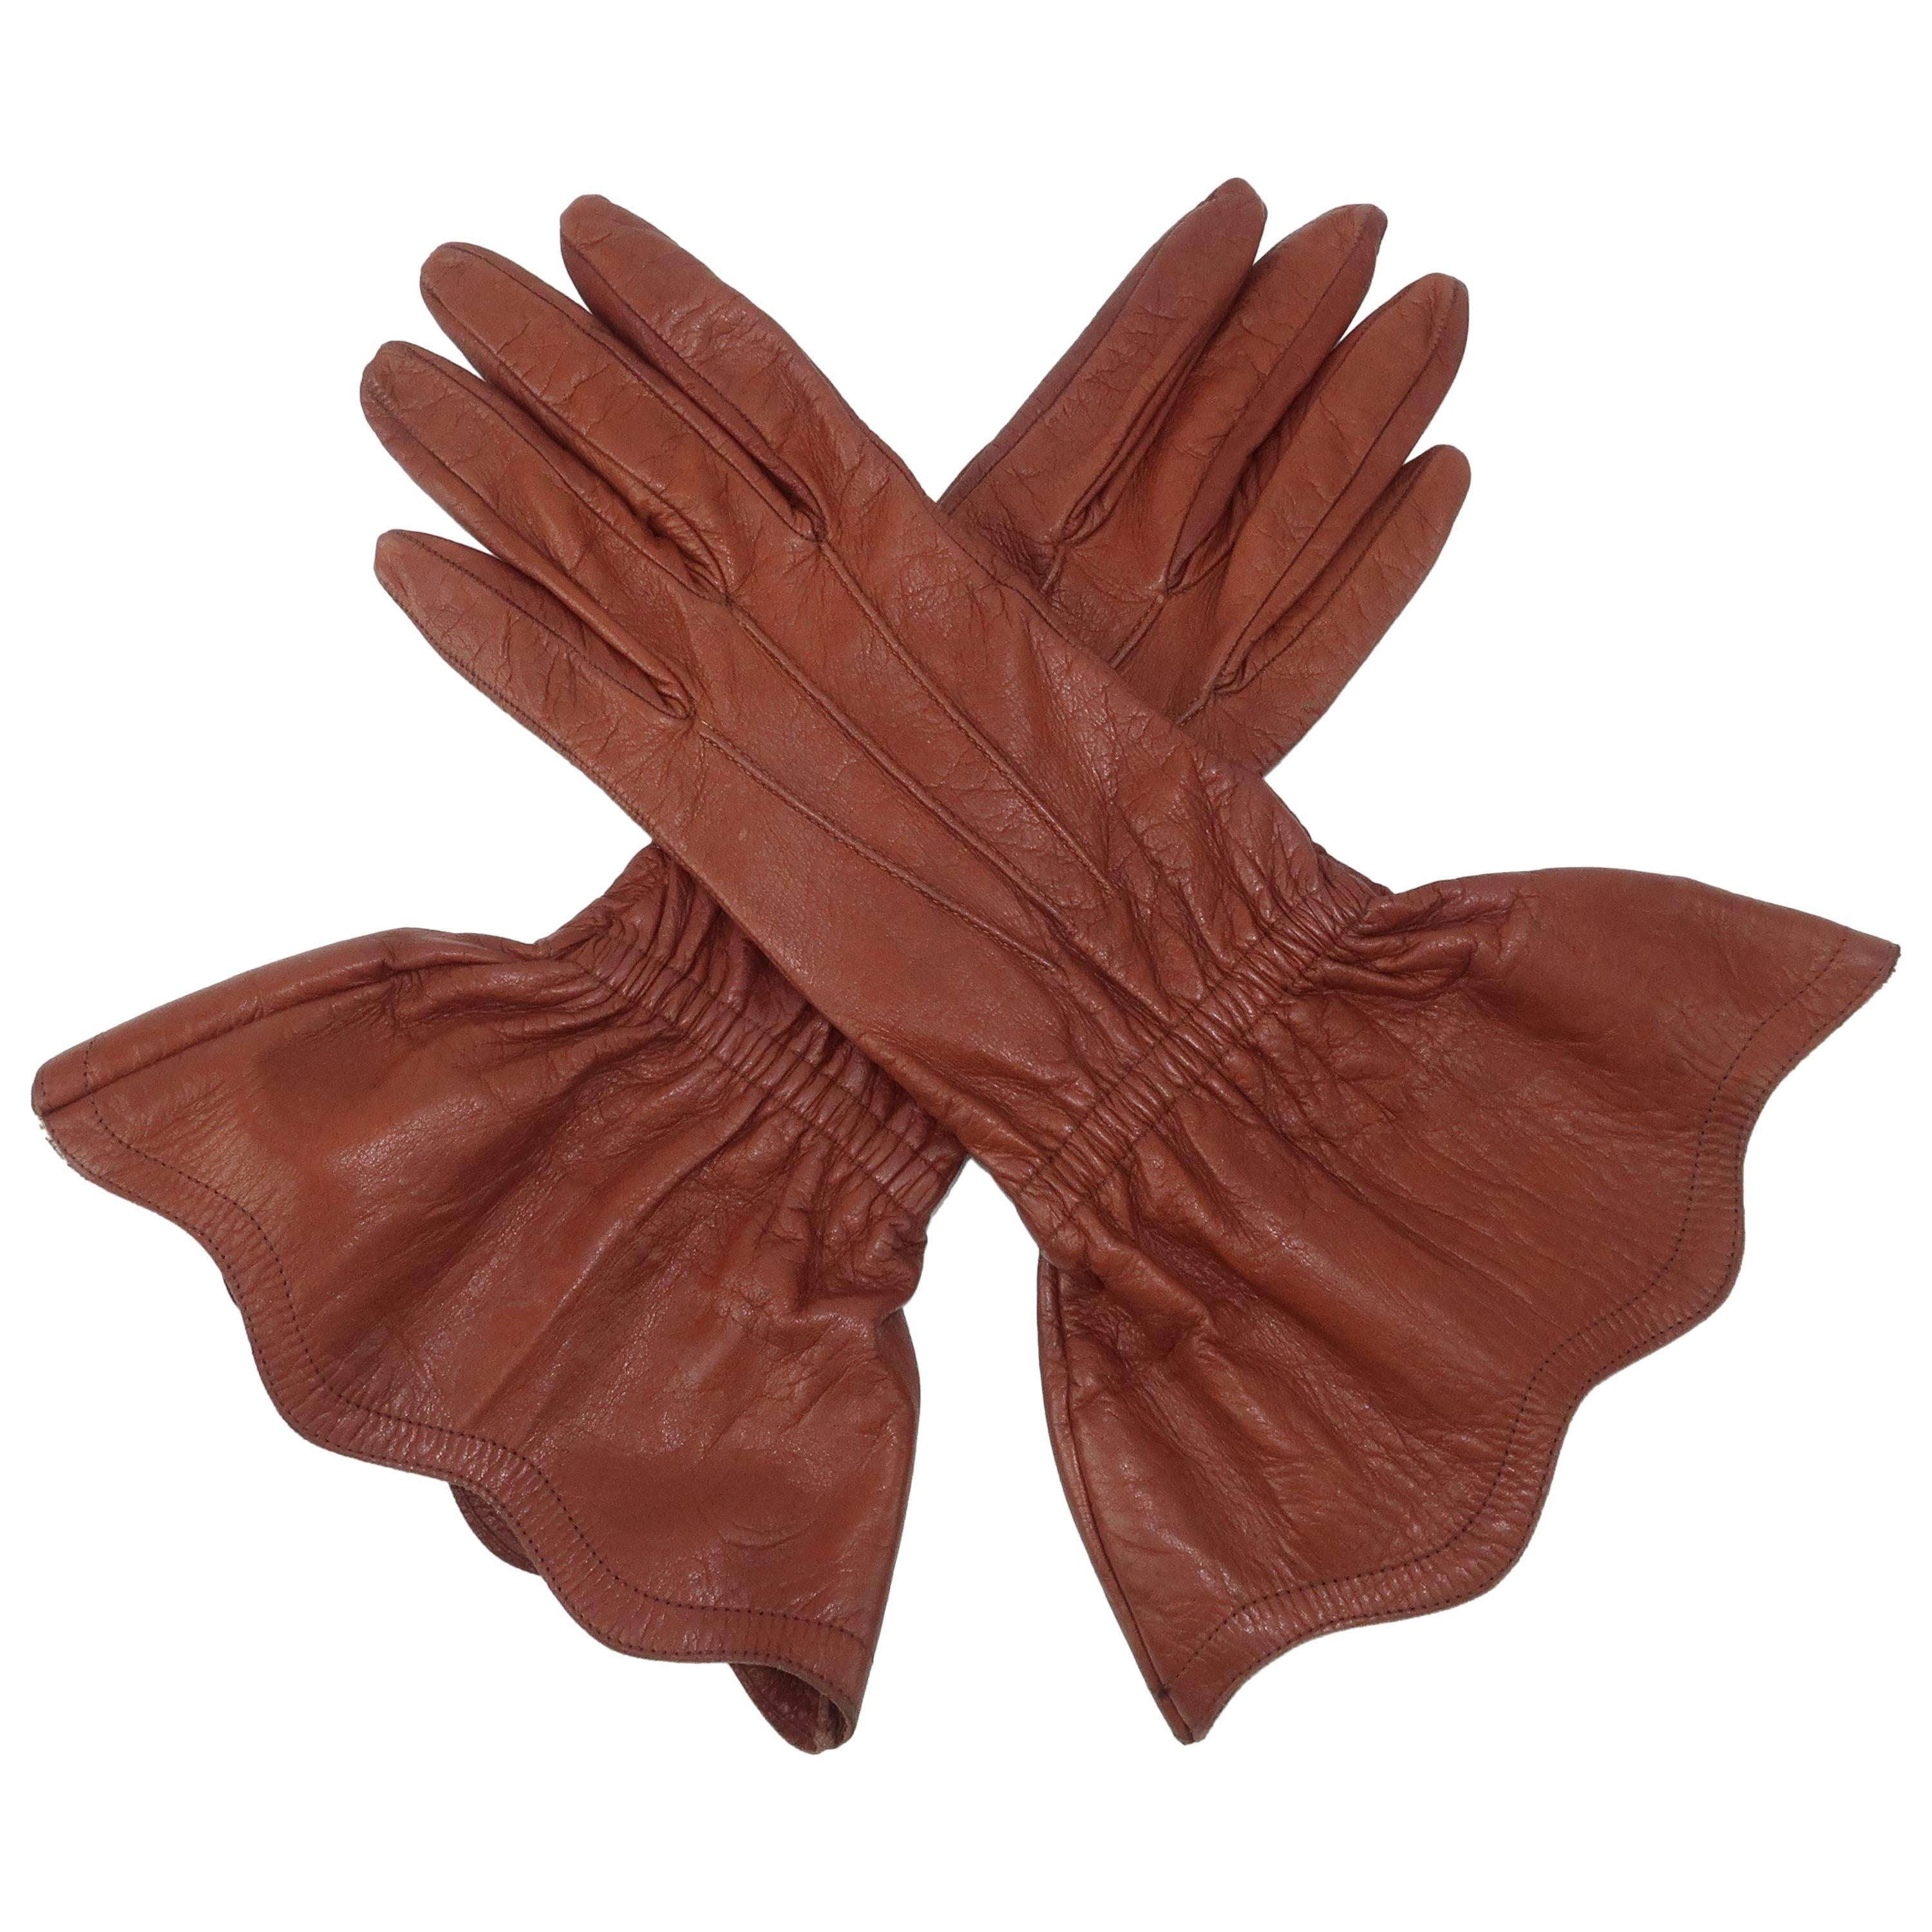 1980's Yves Saint Laurent Cognac Brown Leather Gauntlet Gloves